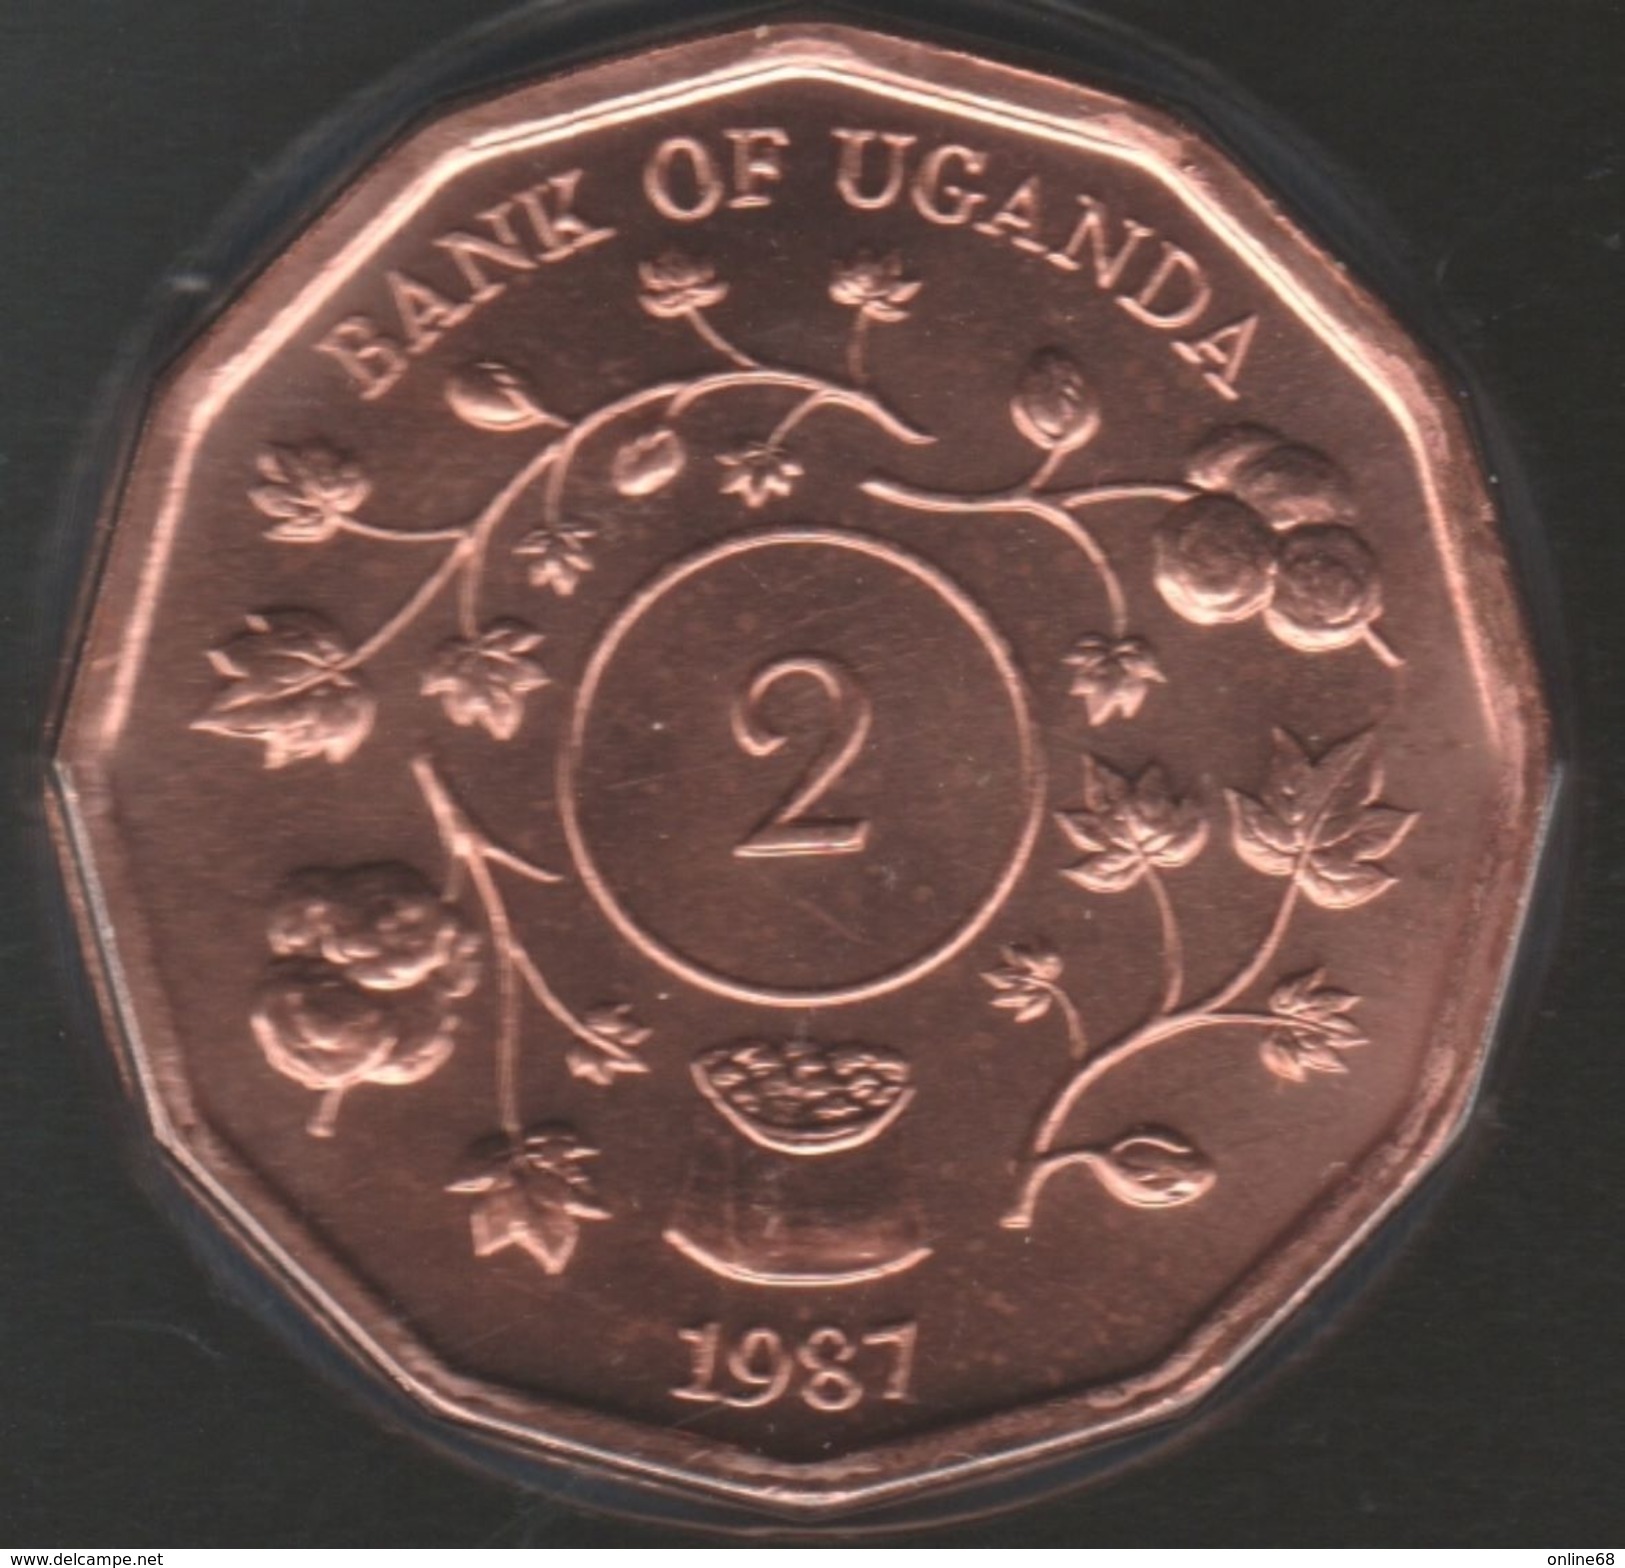 UGANDA 2 SHILLINGS 1987 KM# 28 Dodecagonal 12-sided COIN - Oeganda